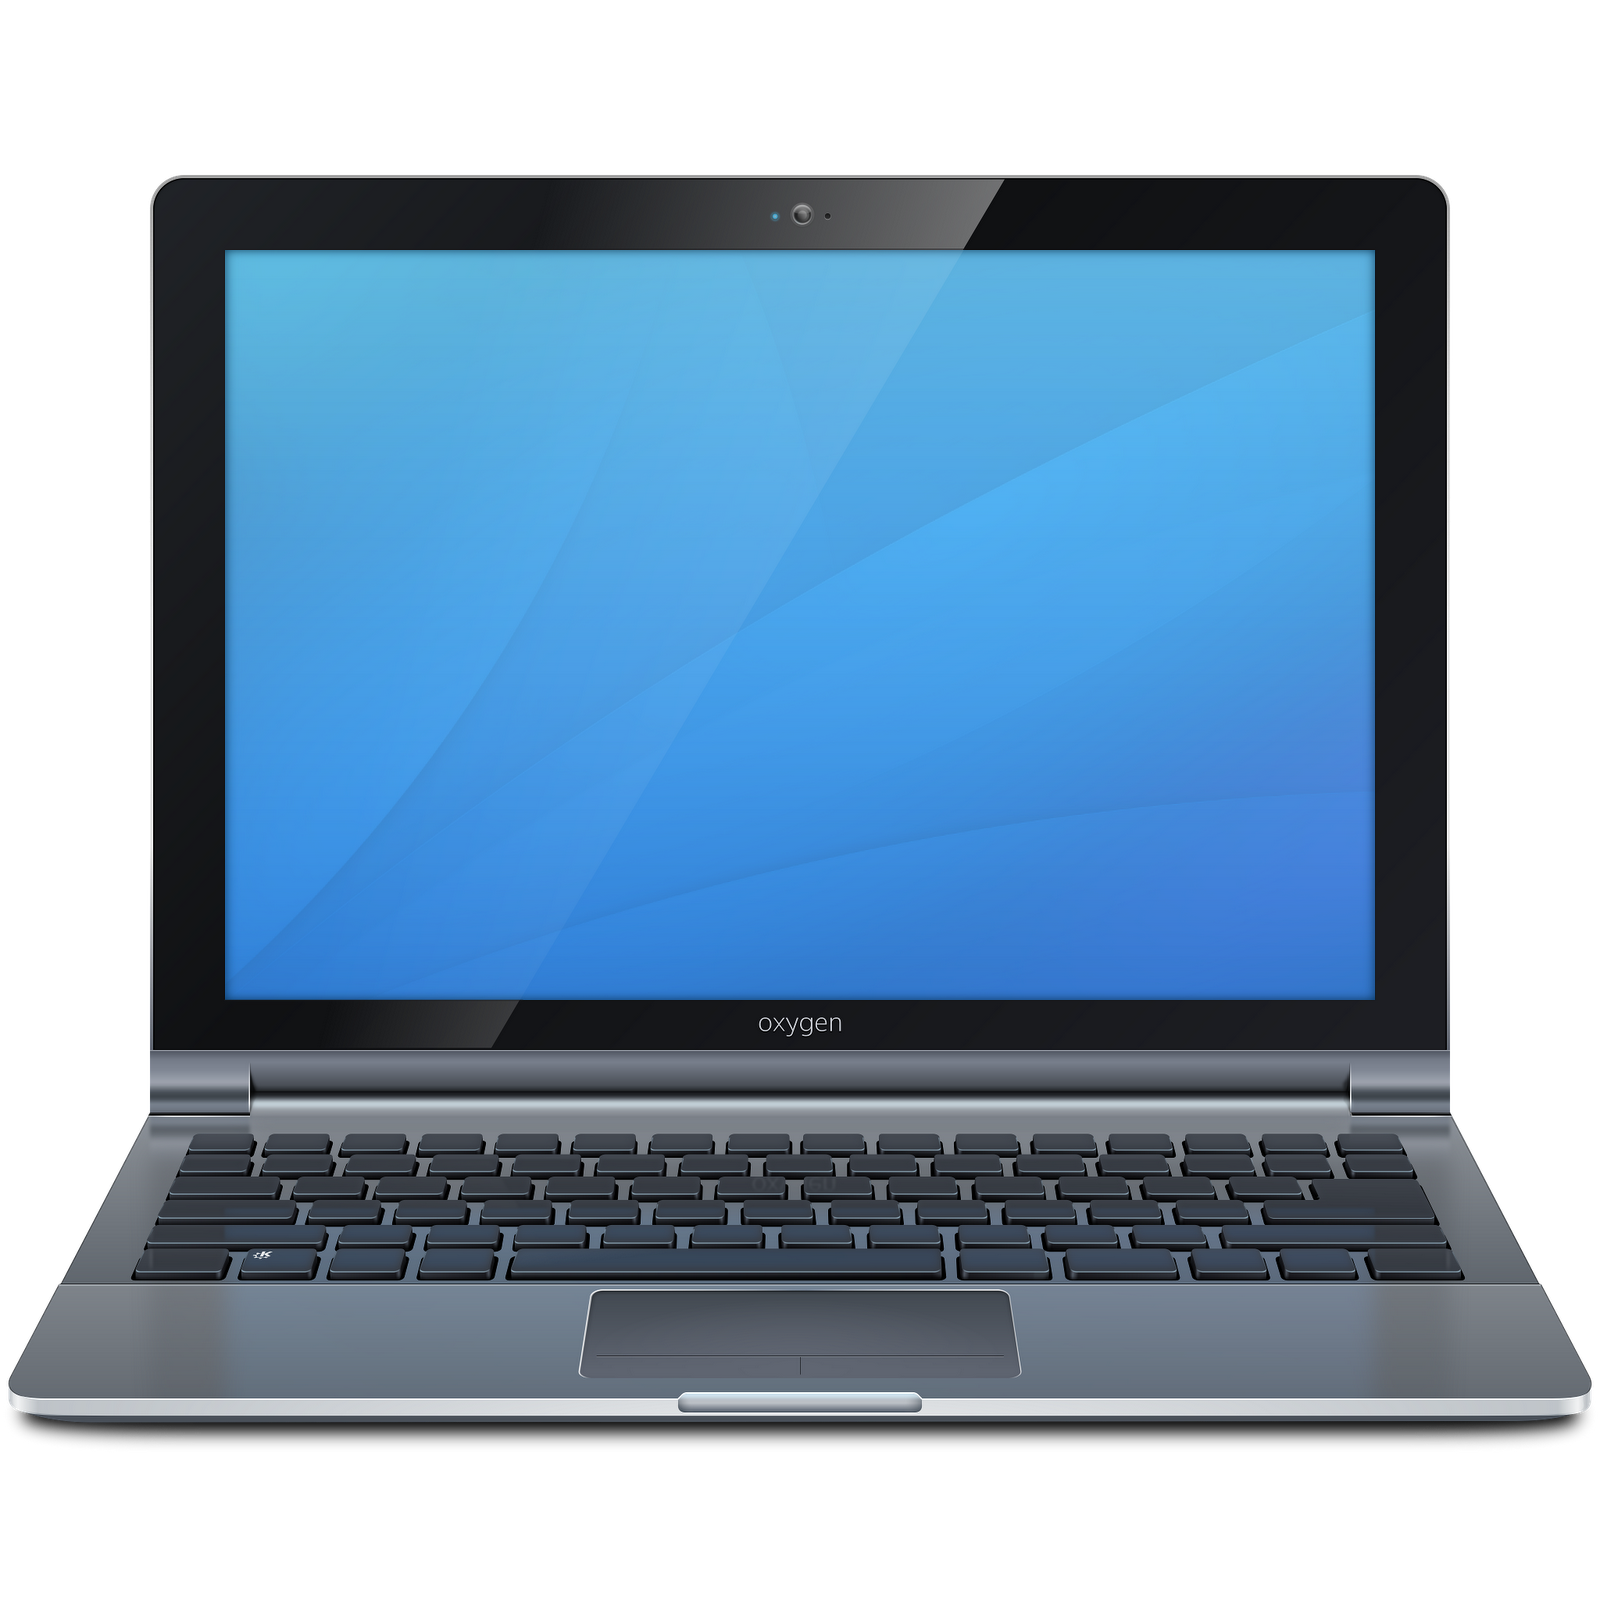 Free Laptop PNG Transparent Images, Download Free Laptop PNG